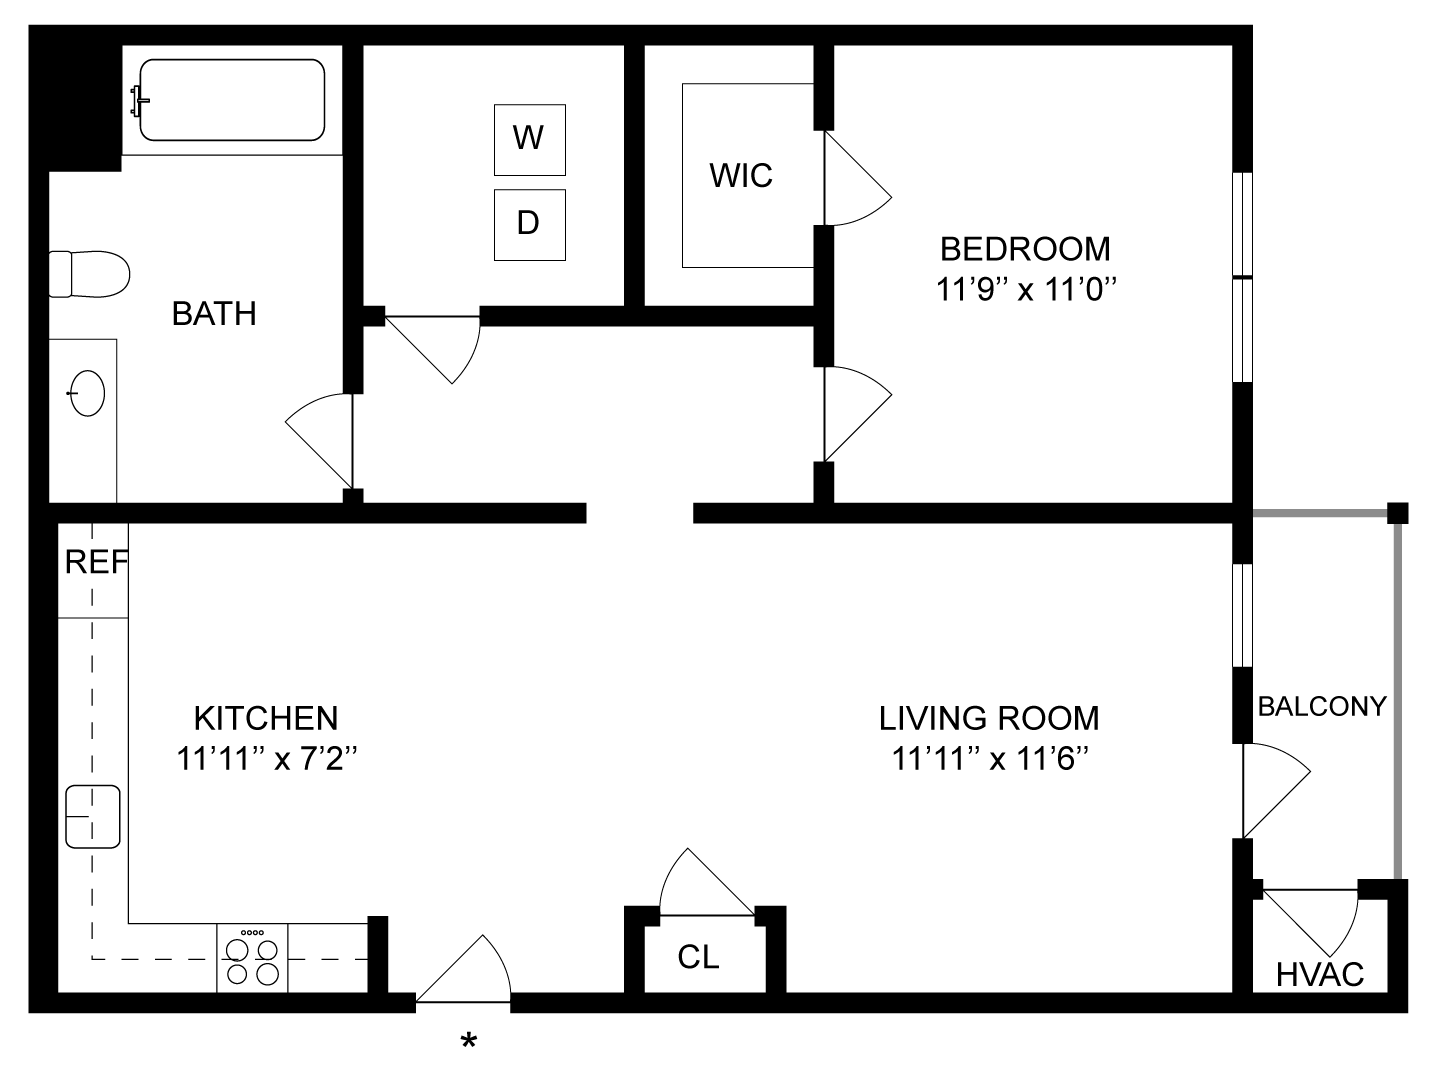 Floorplan for Apartment #02-B32, 1 bedroom unit at Halstead Hopkinton